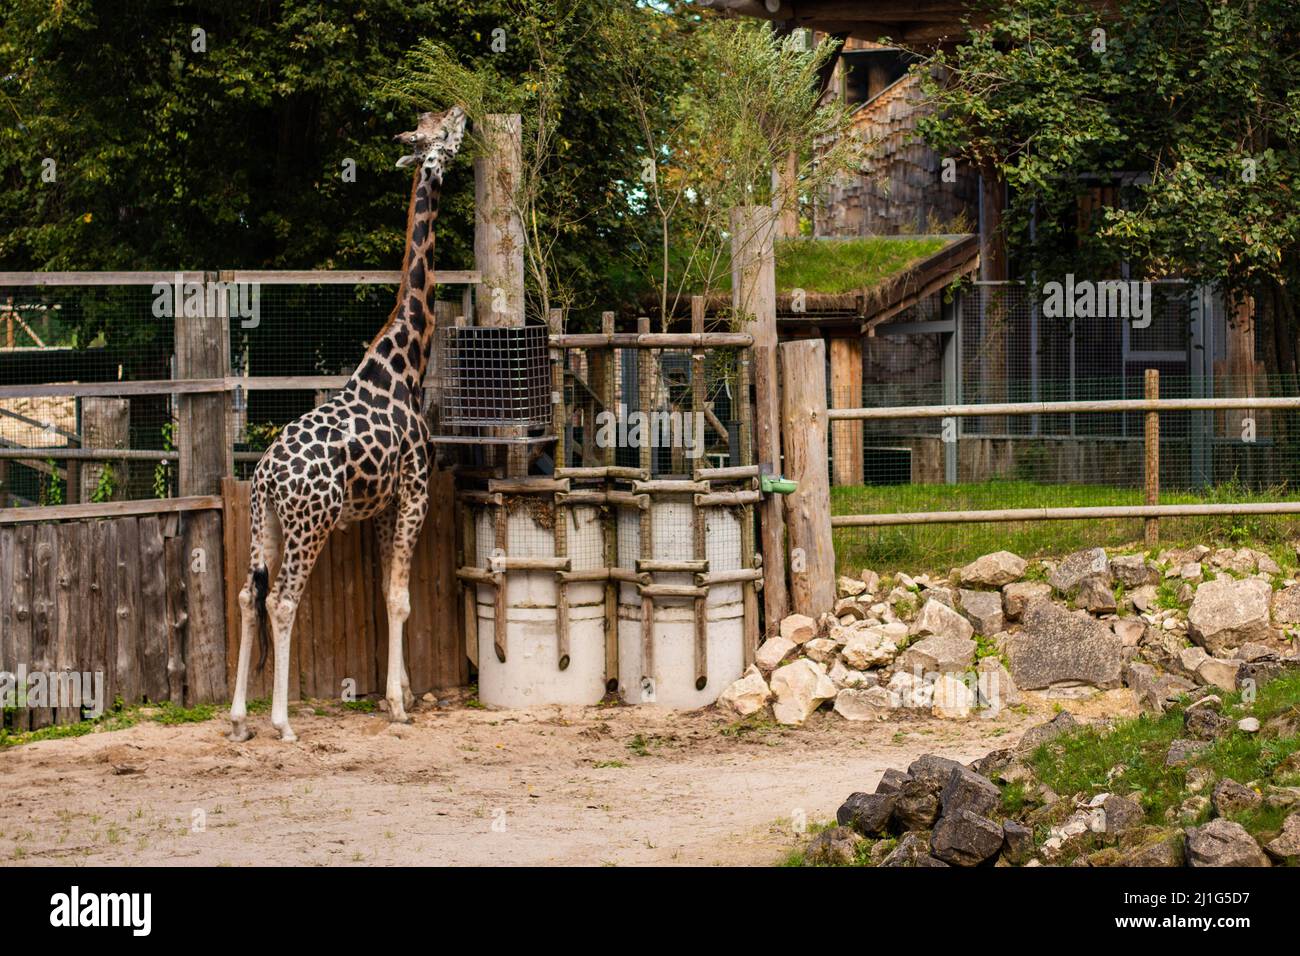 Giraffe eat tree leaves at the Zoo Stock Photo